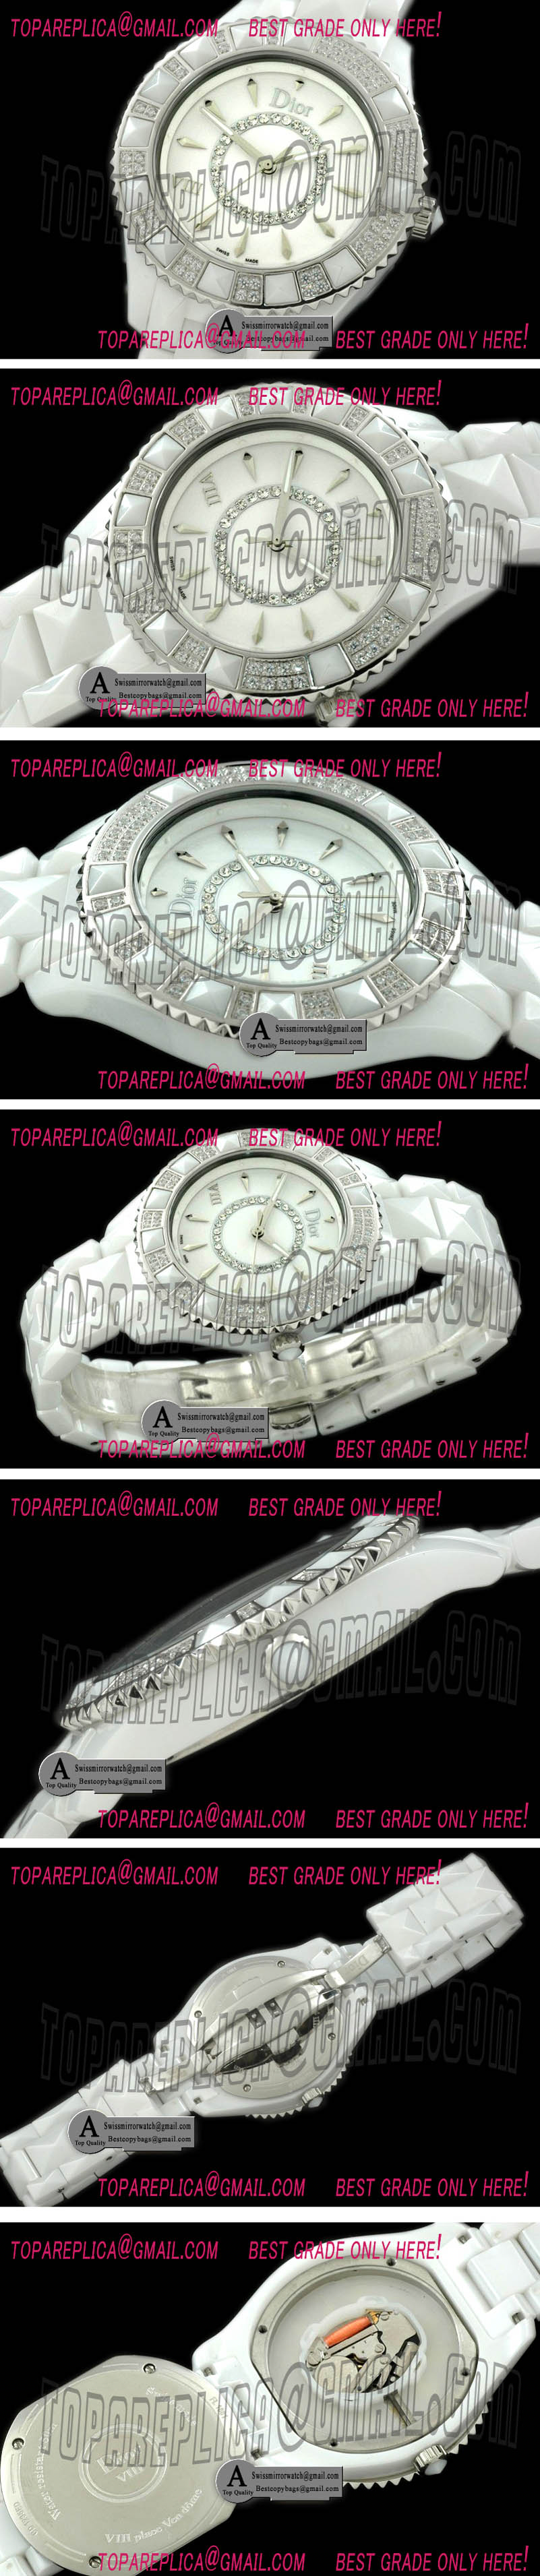 Christian Dior VIII Ceramic/Ceramic/Diamond White Jap Quartz Replica Watches